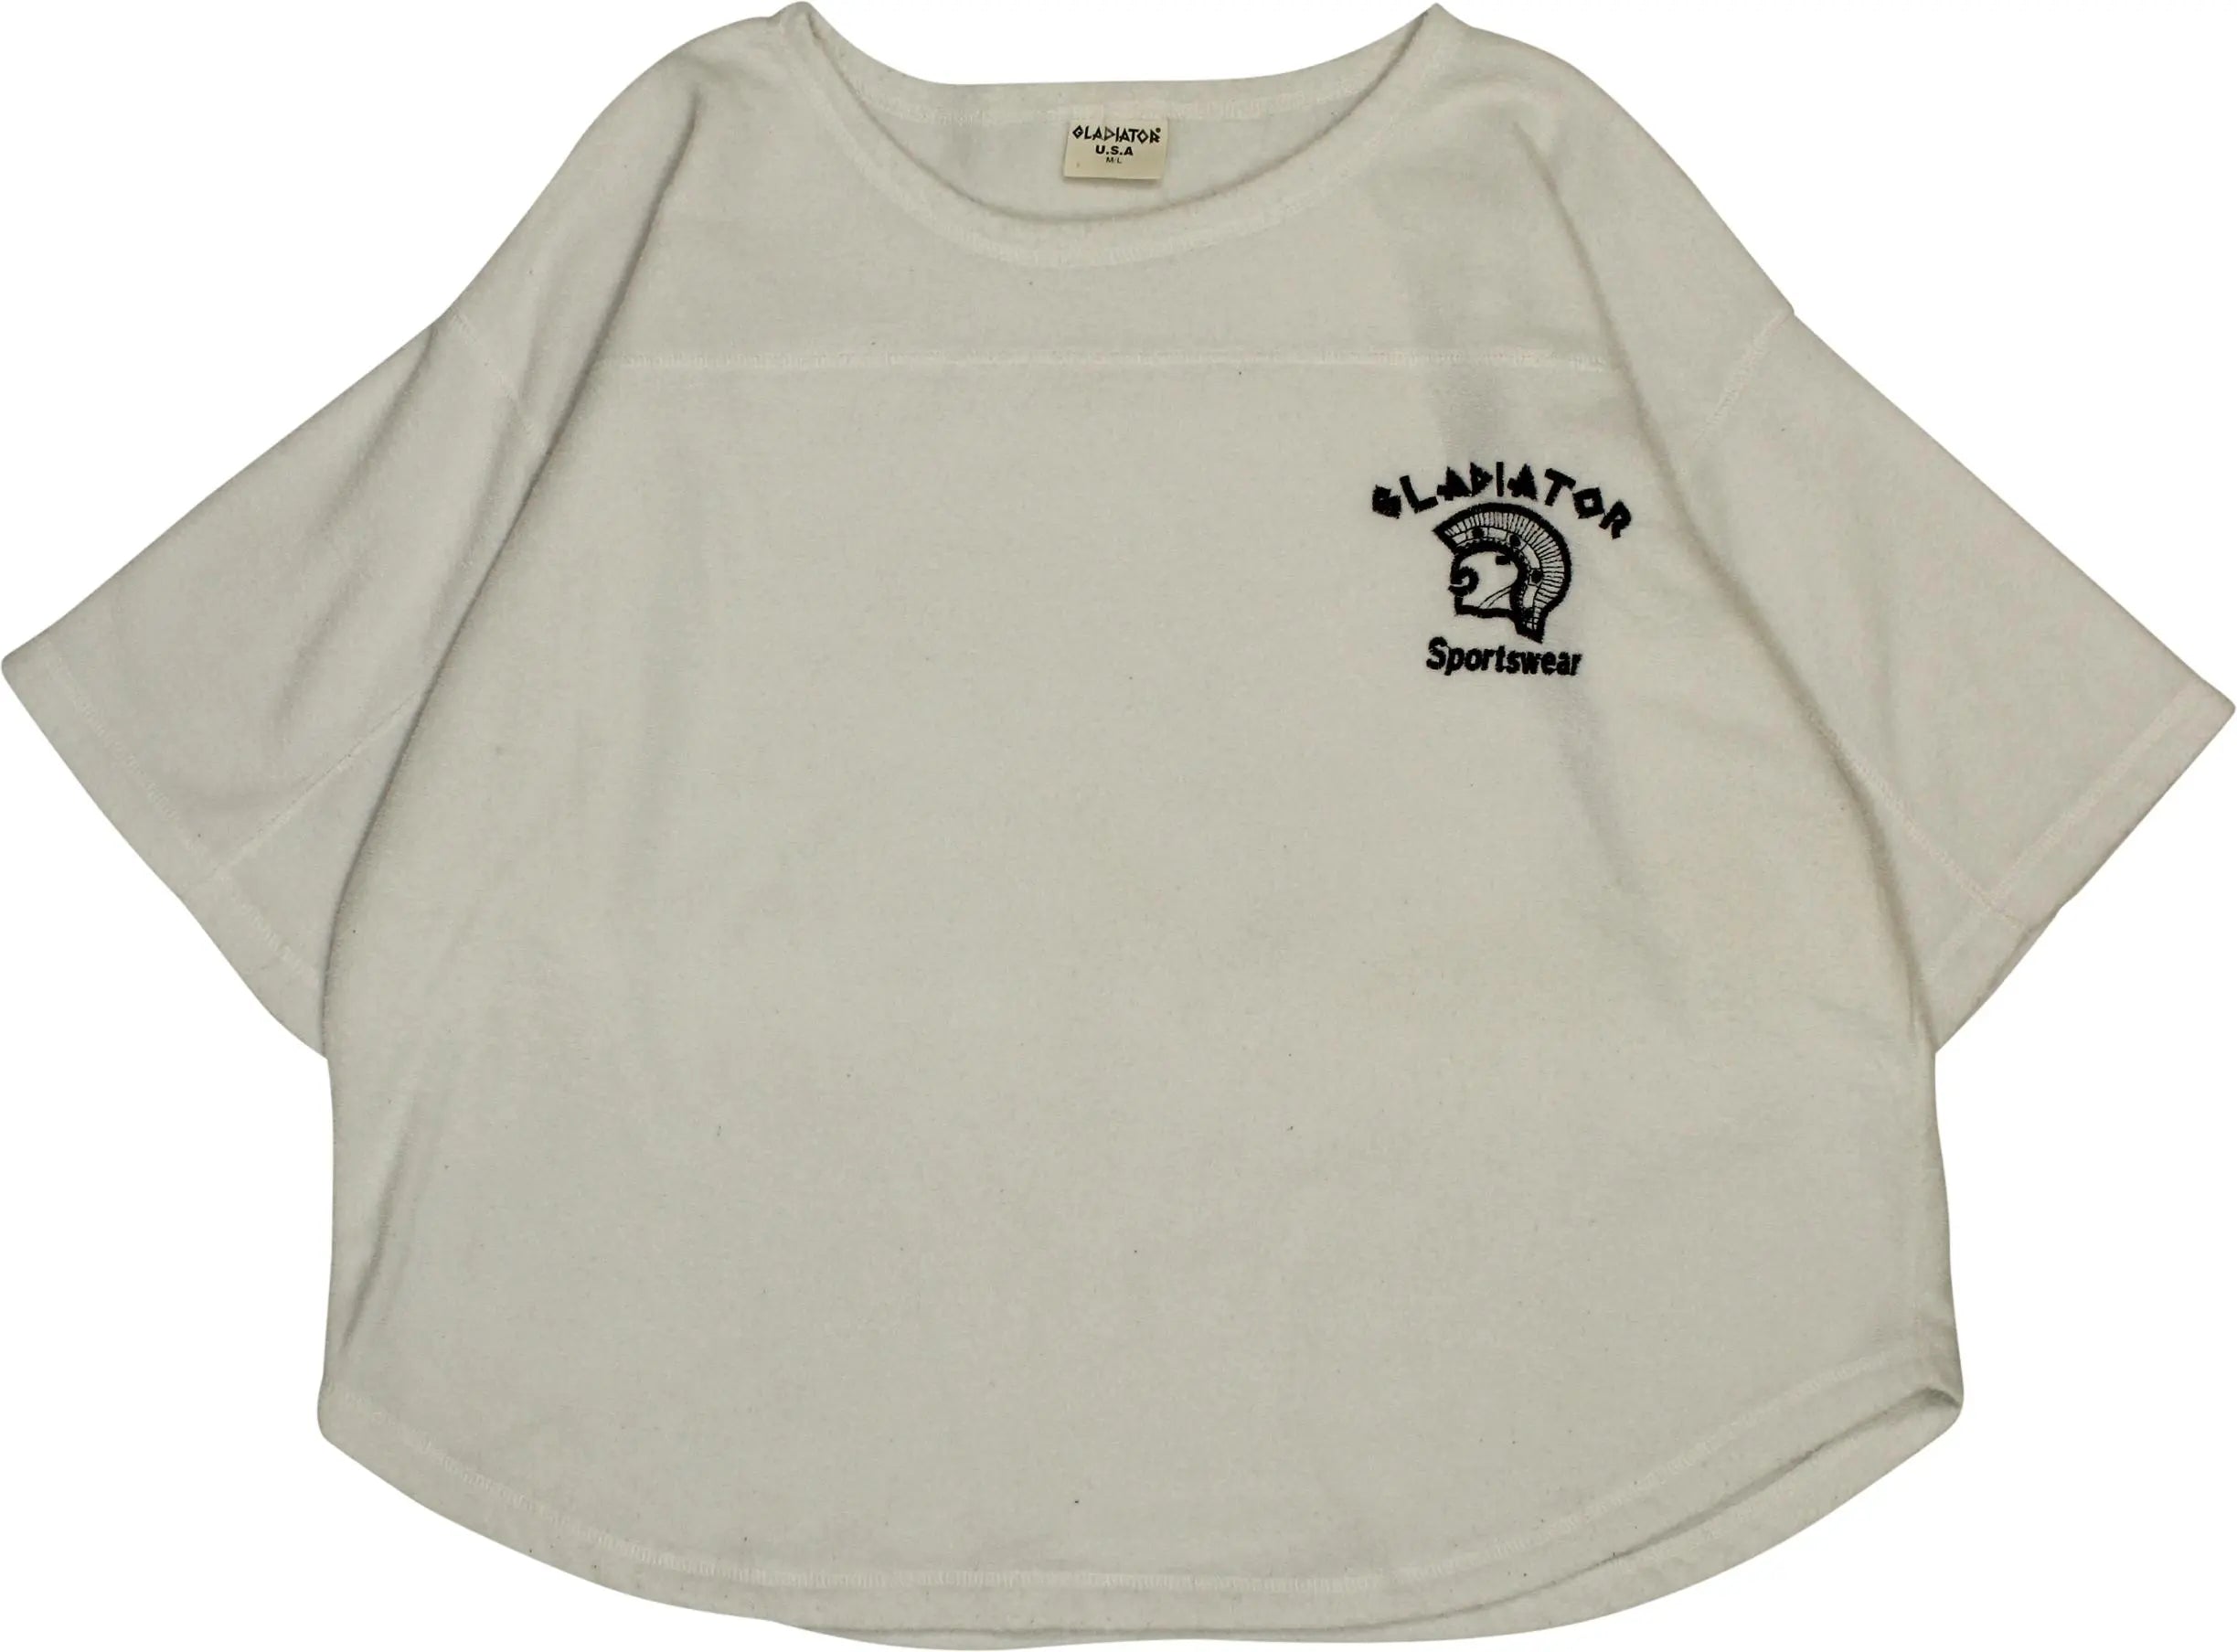 Gladiator - Fleece Short Sleeve Shirt- ThriftTale.com - Vintage and second handclothing